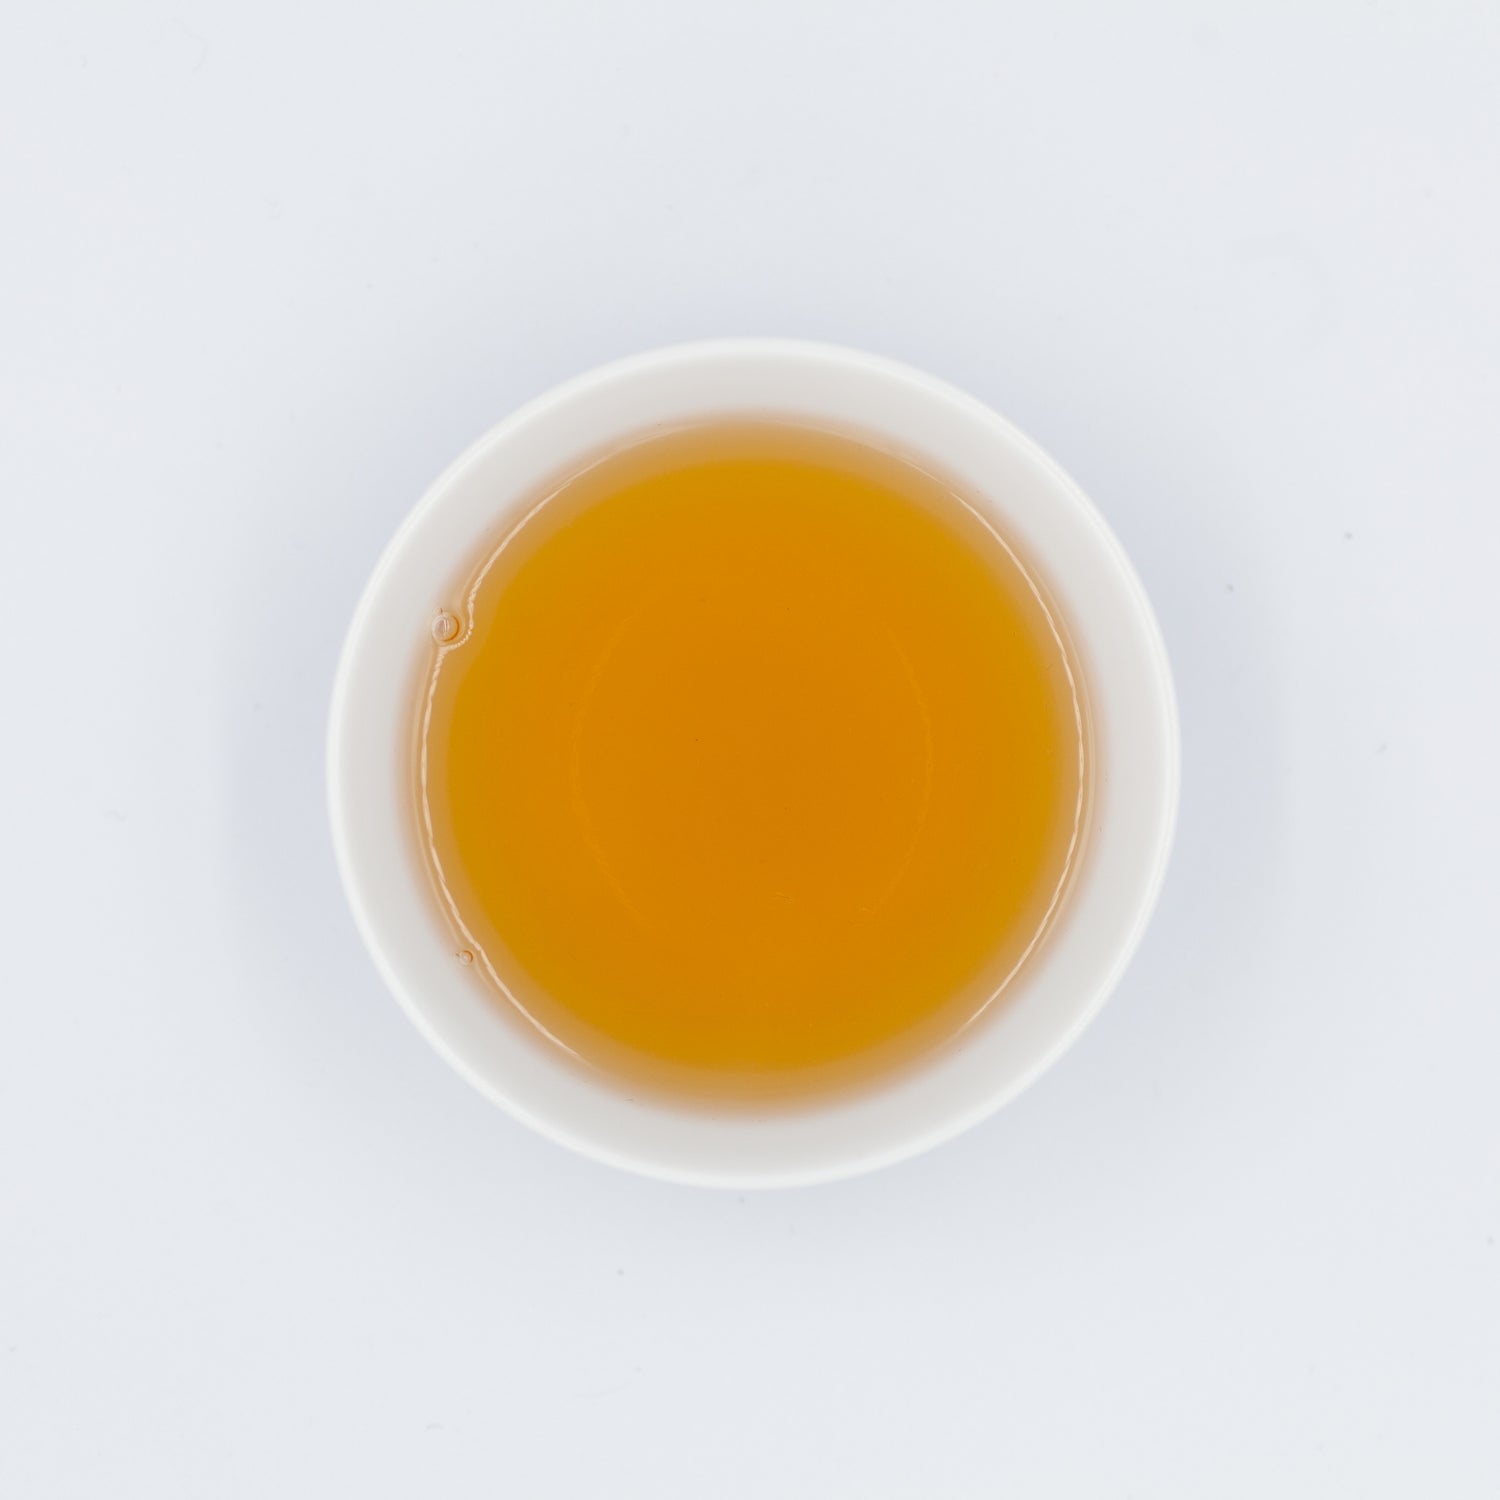 Koshun Black from BROO - Craft Tea from Japan. Single-origin, small-batch, pesticide-free tea grown in Ashikita, Kumamoto. 香駿紅茶